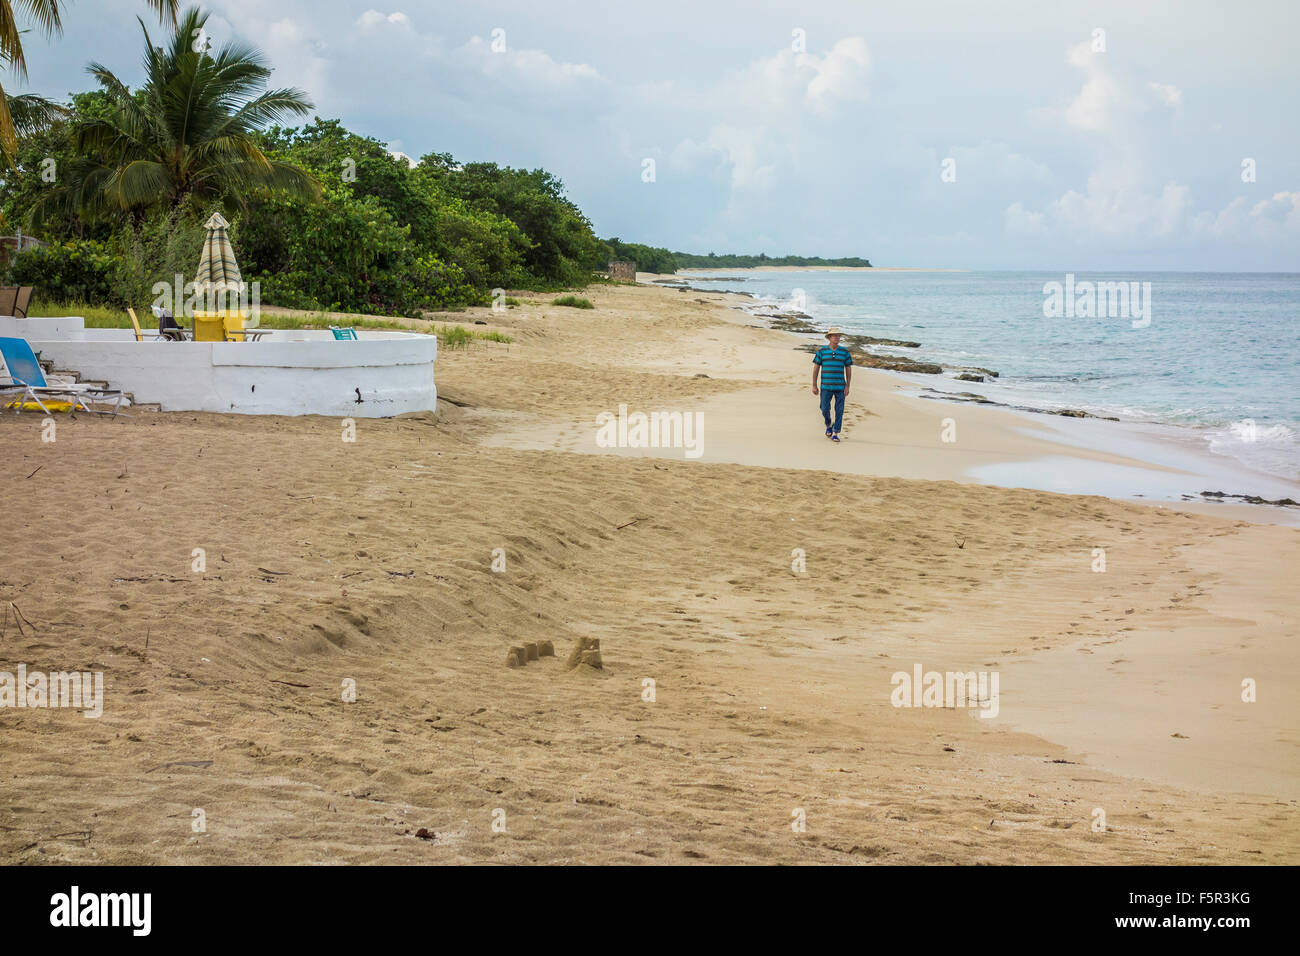 A Caucasian Senior Man Walks Sancastle Beach In St Croix U S